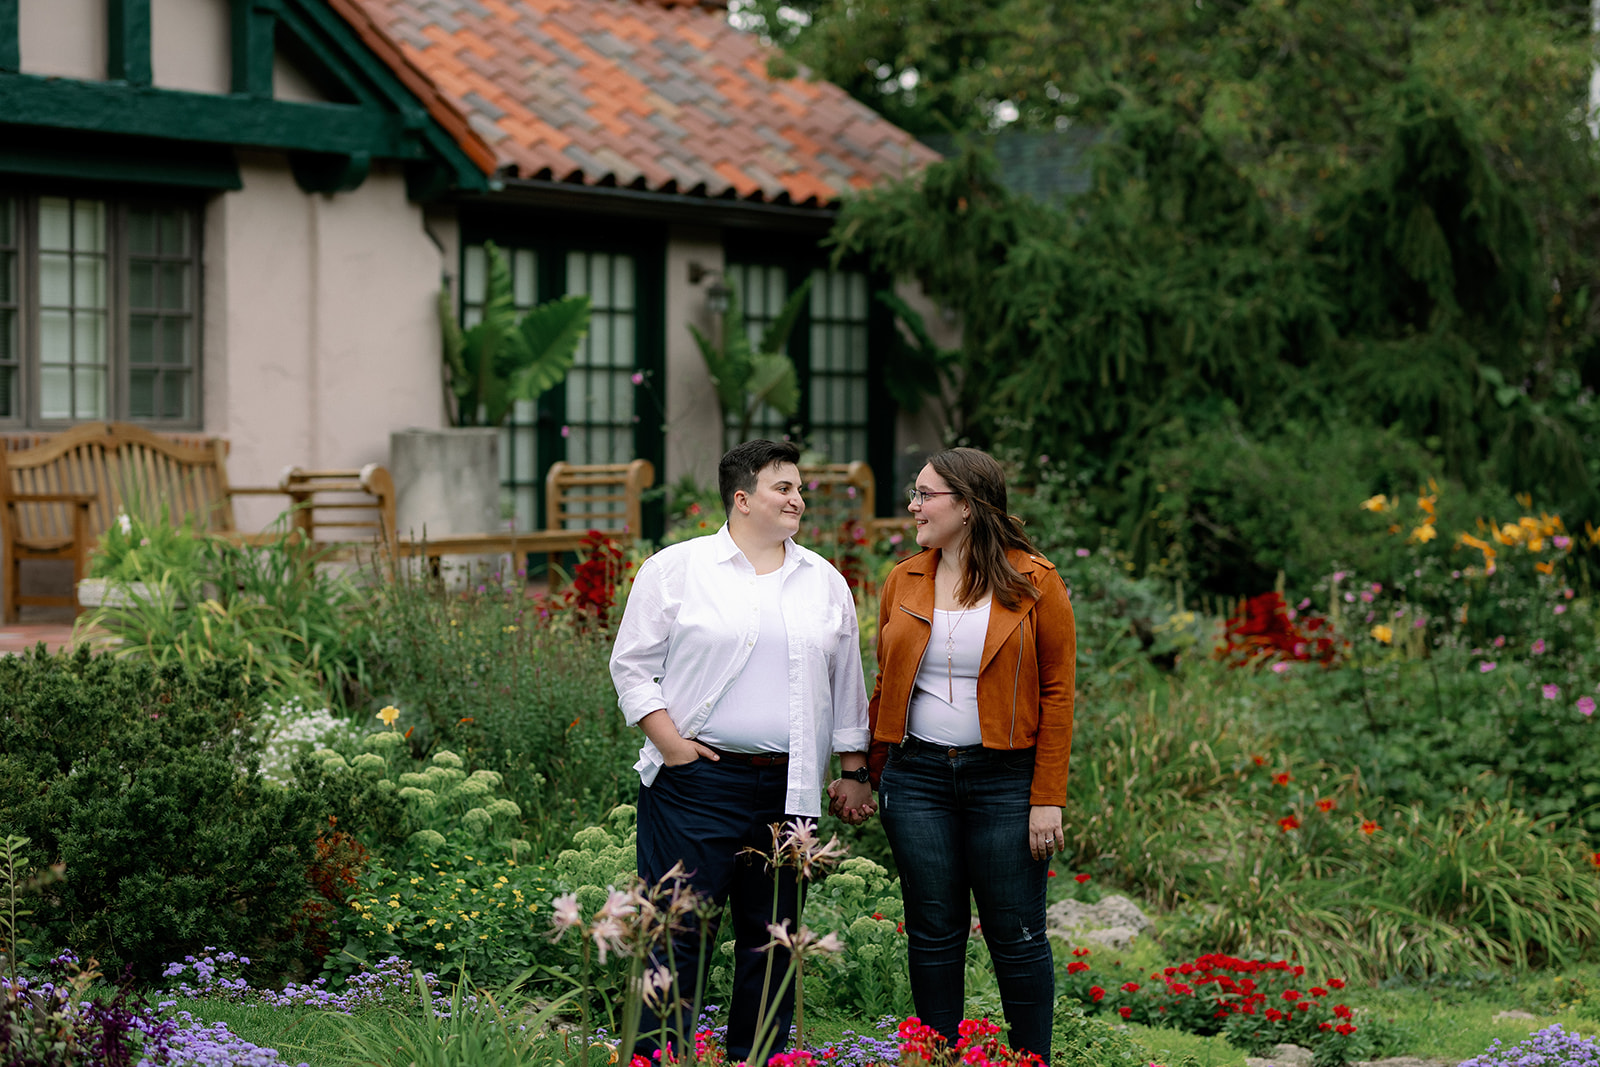 Two women standing in a garden.